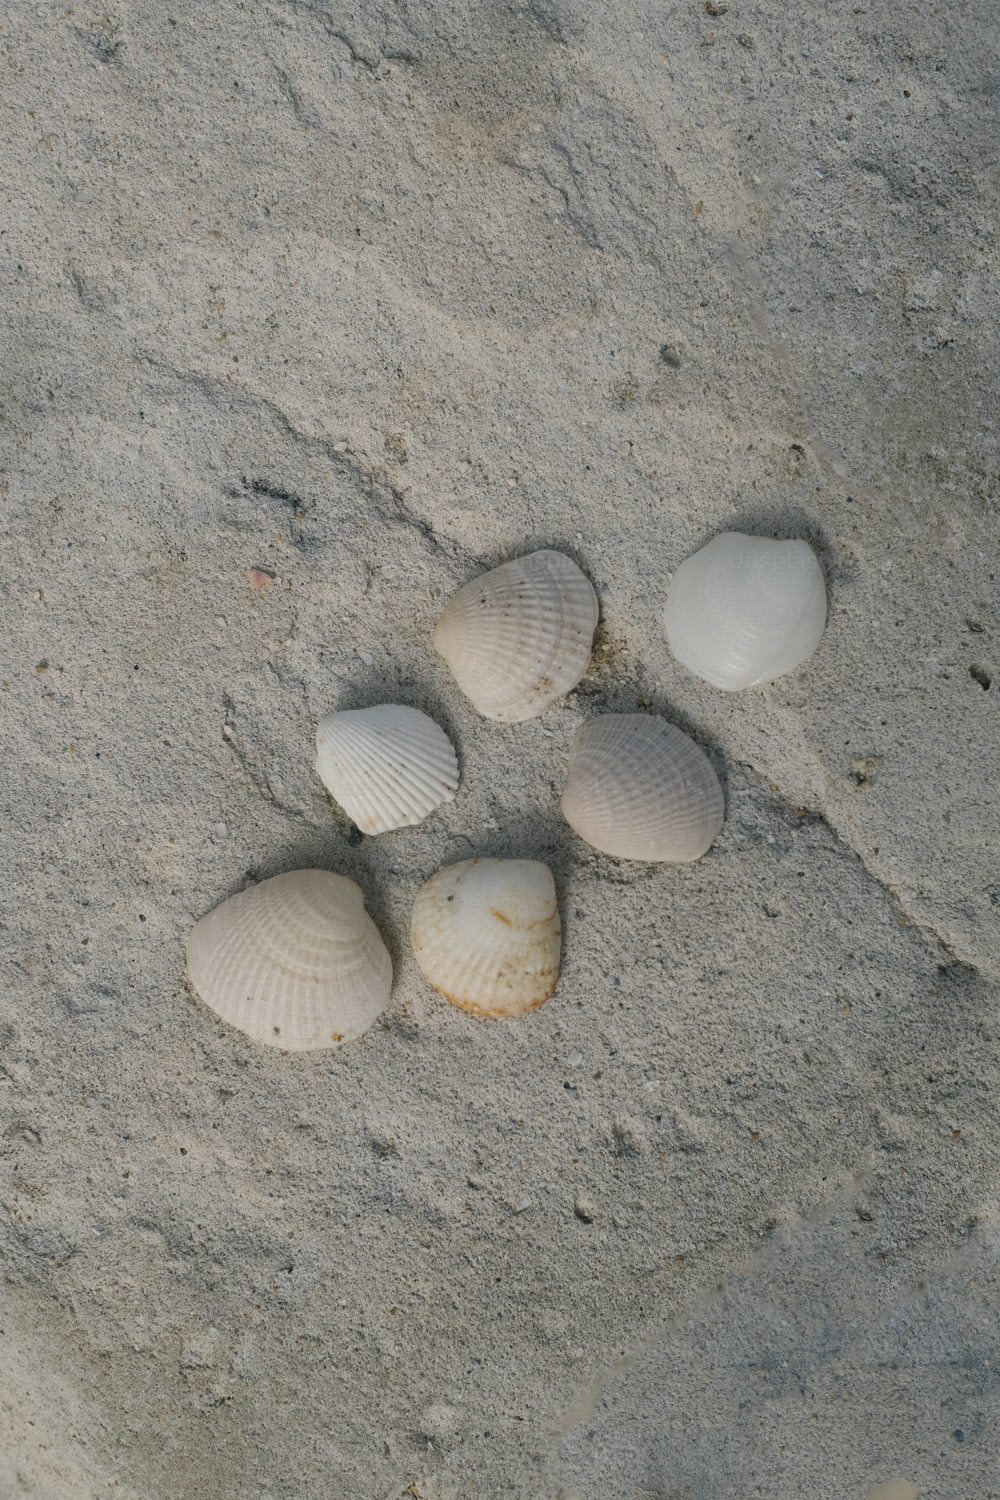 four seashells in the sand on a beach